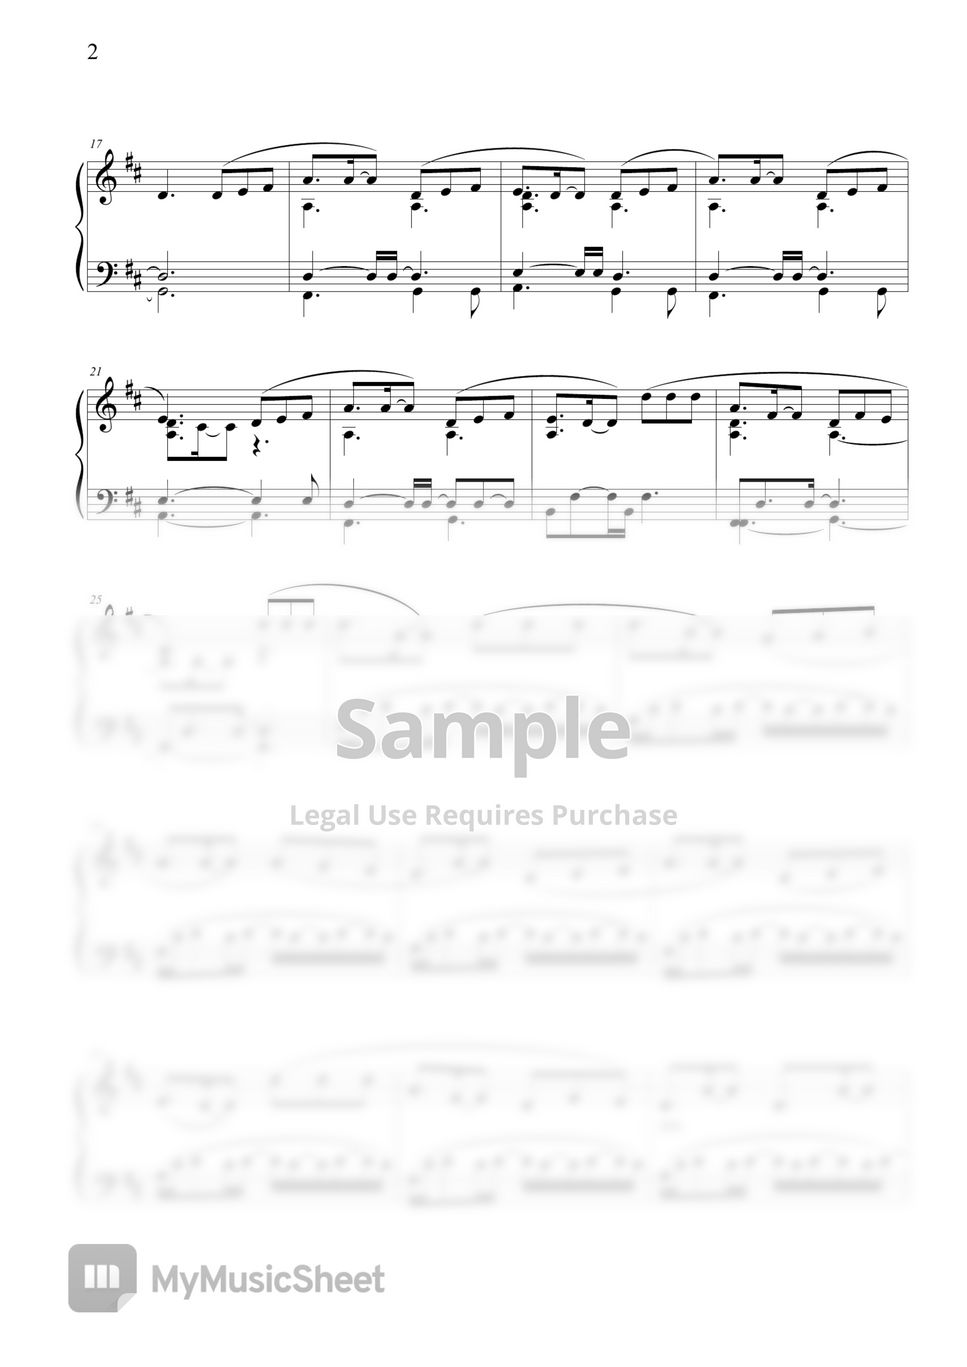 HYMN - I Must Tell Jesus (Piano Arrangement) by Hwan ho Jung